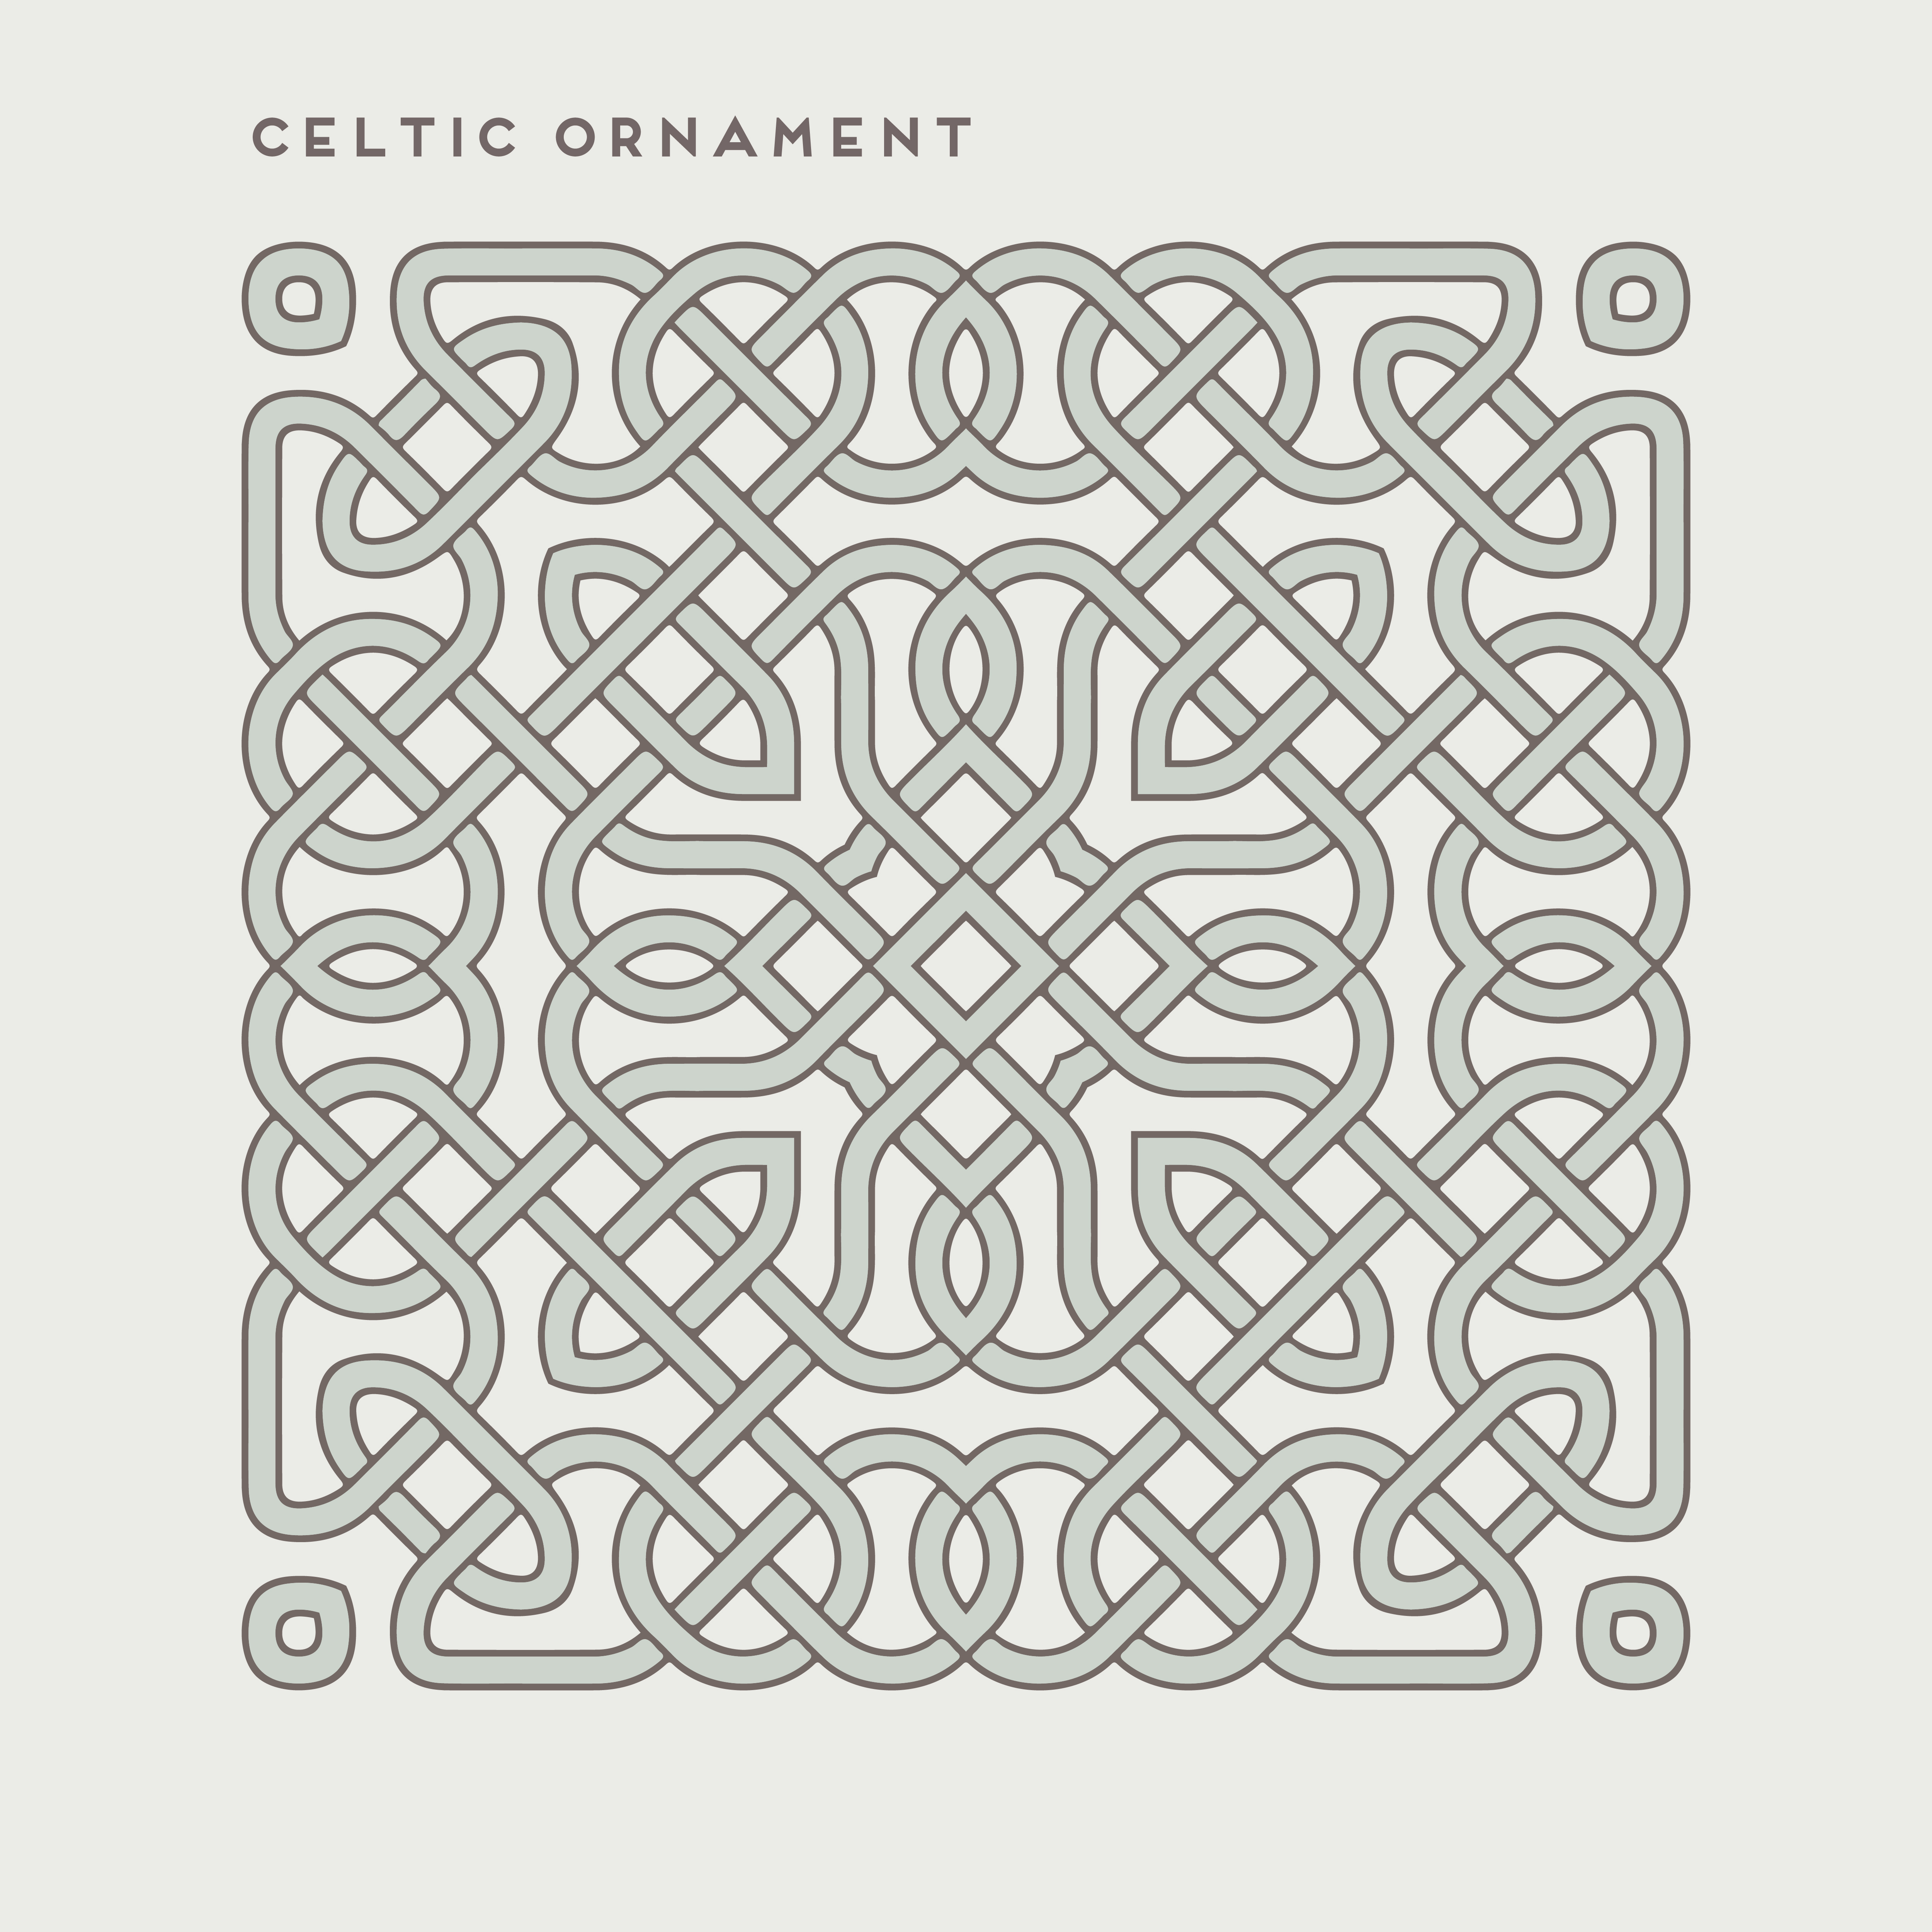 celtic ornament 1 فرم سفید آماده کودکانه